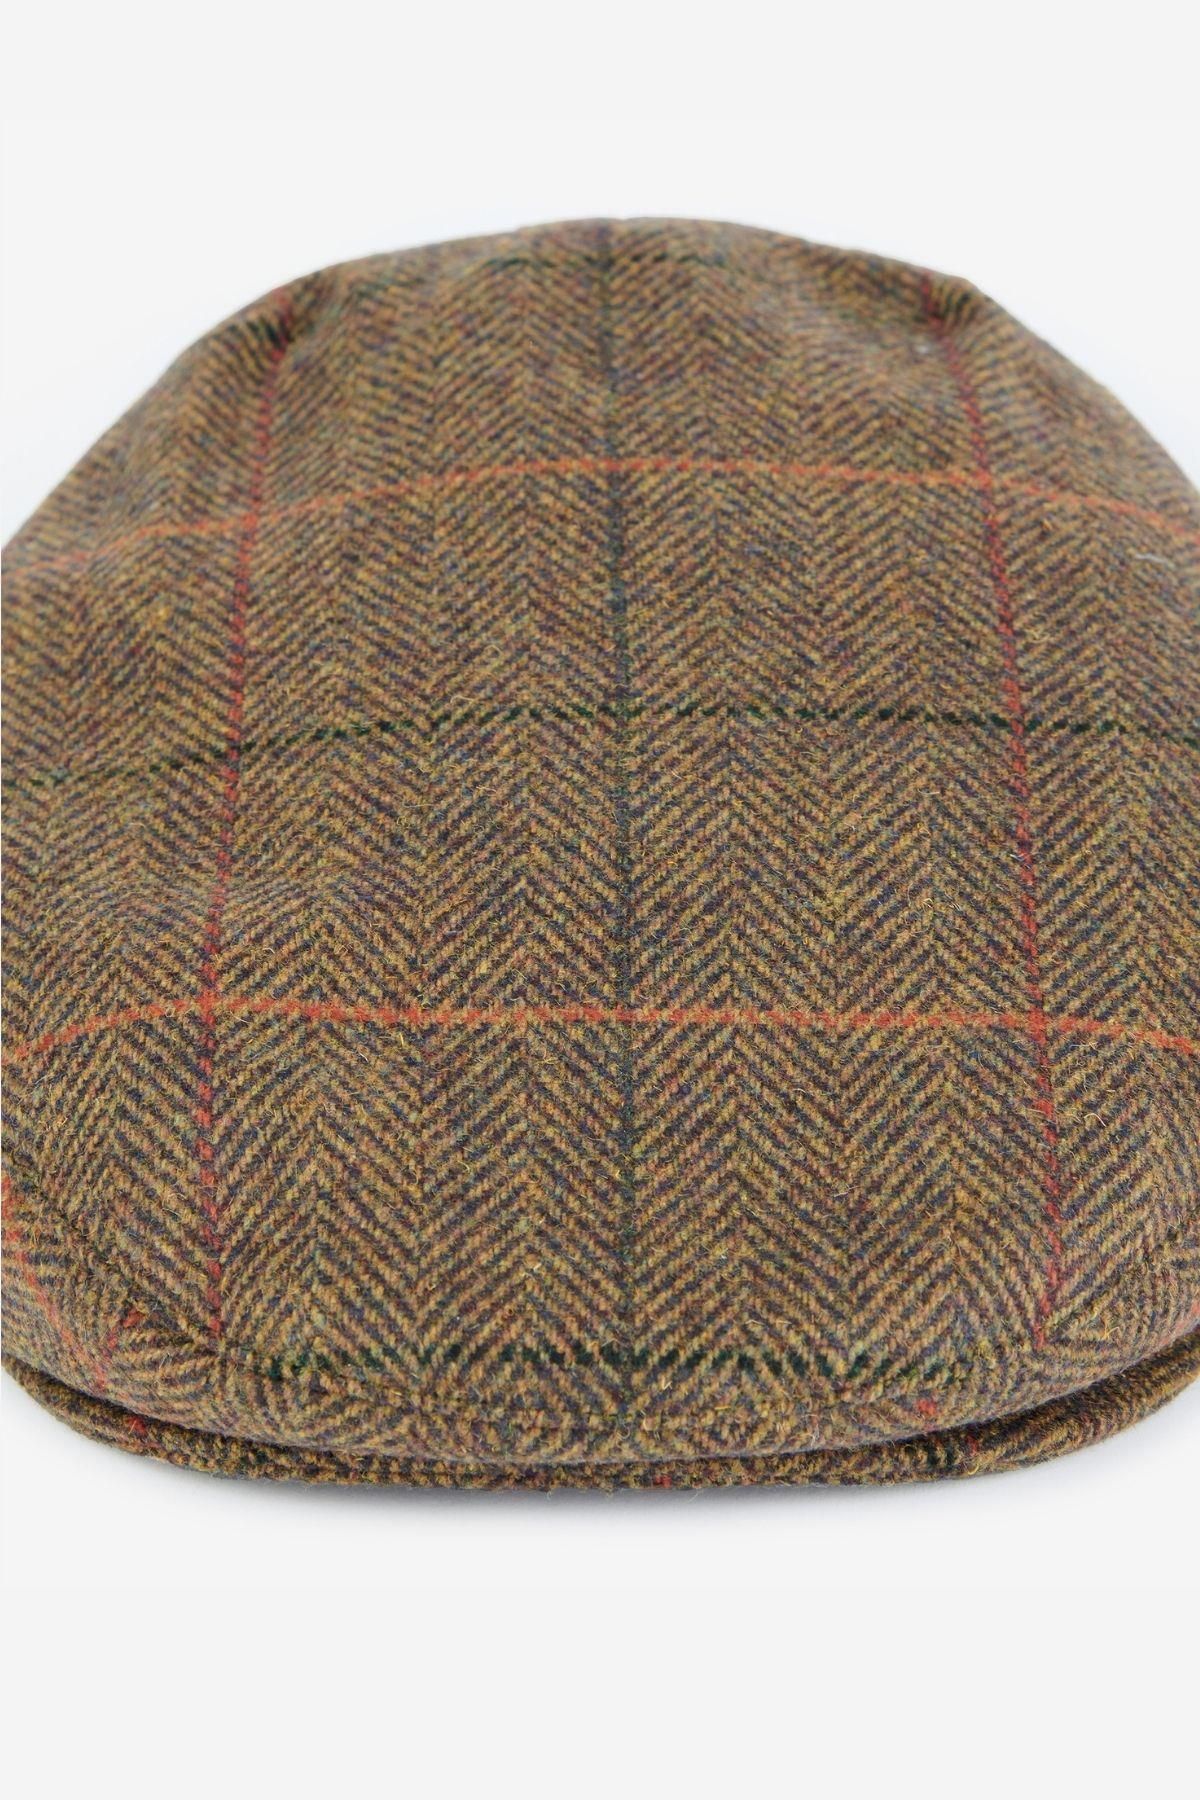 Barbour Wilkin Flat Hat OL31 زیتون/نارنجی/قرمز